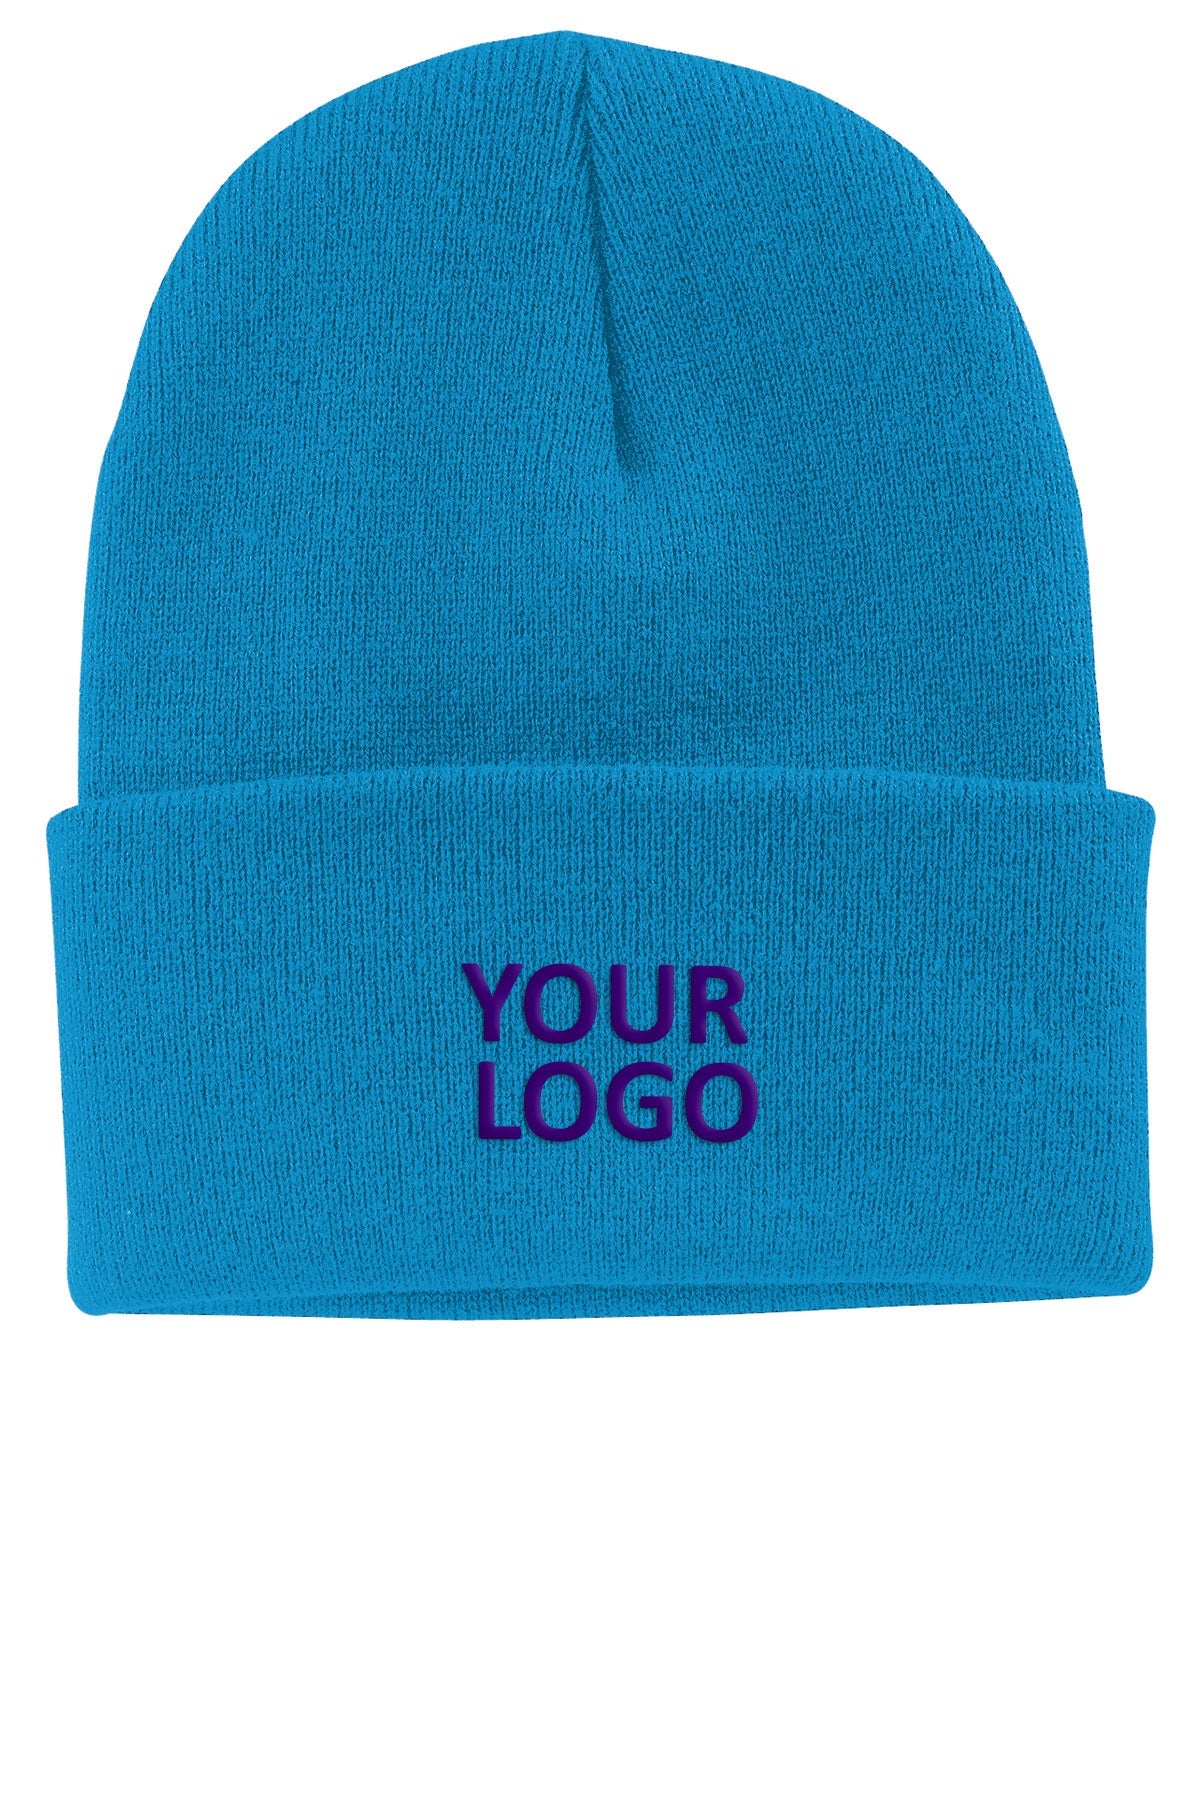 Port & Company Customized Knit Caps, Neon Blue